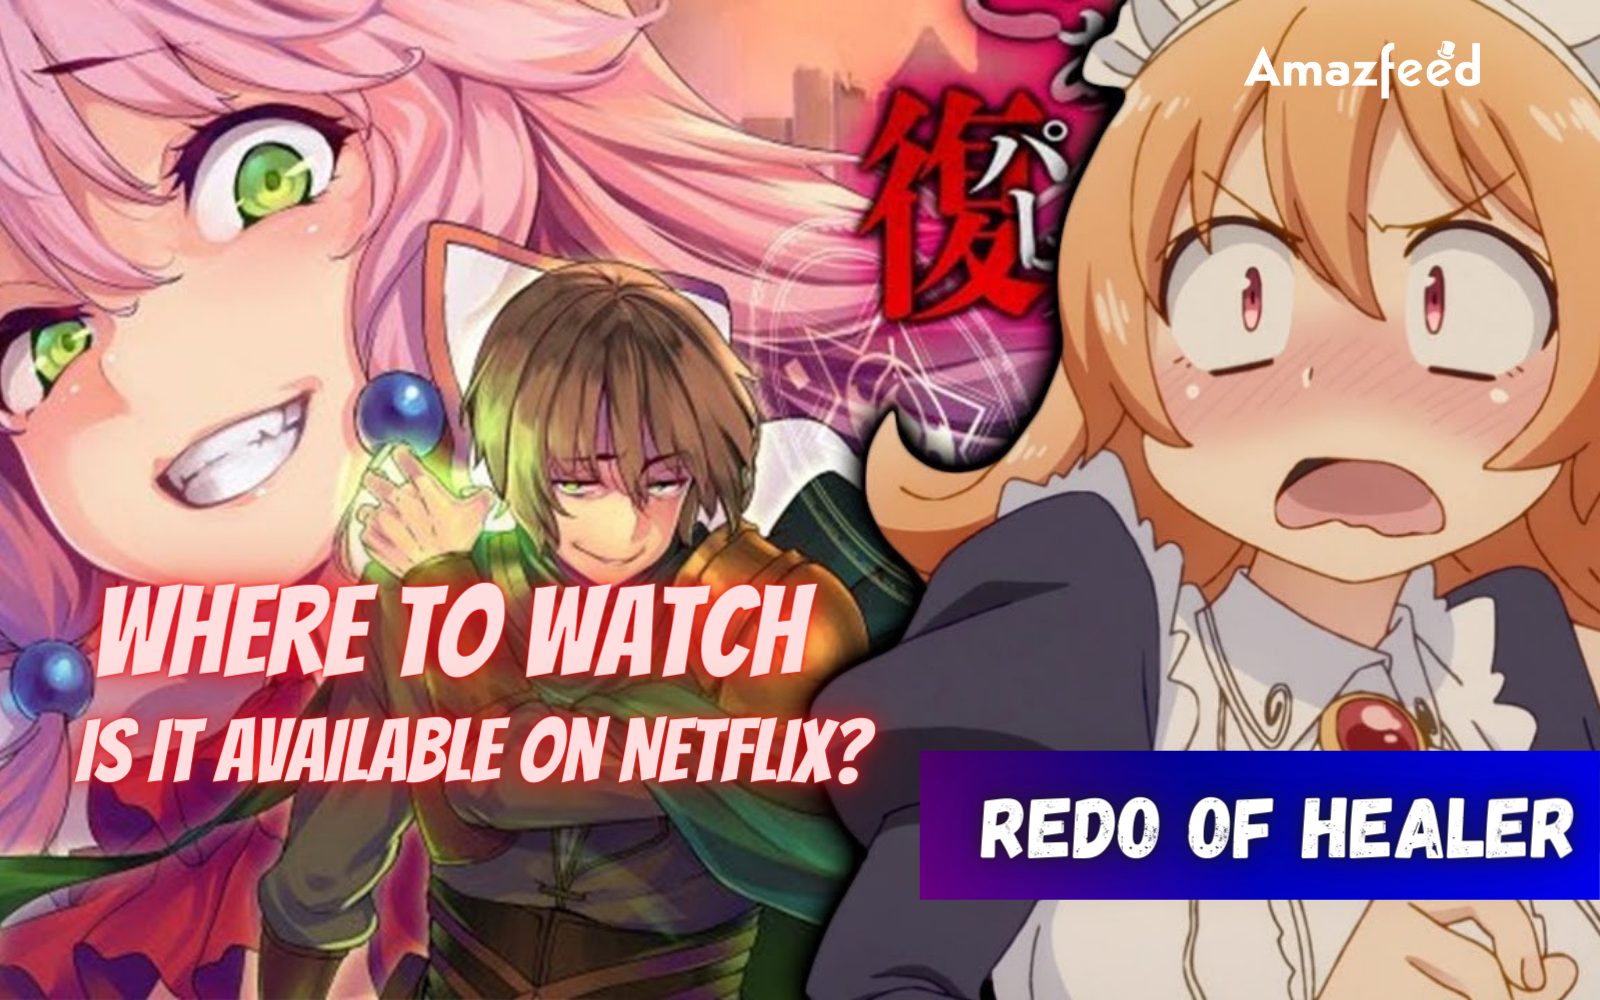 Watch Redo of Healer season 1 episode 10 streaming online